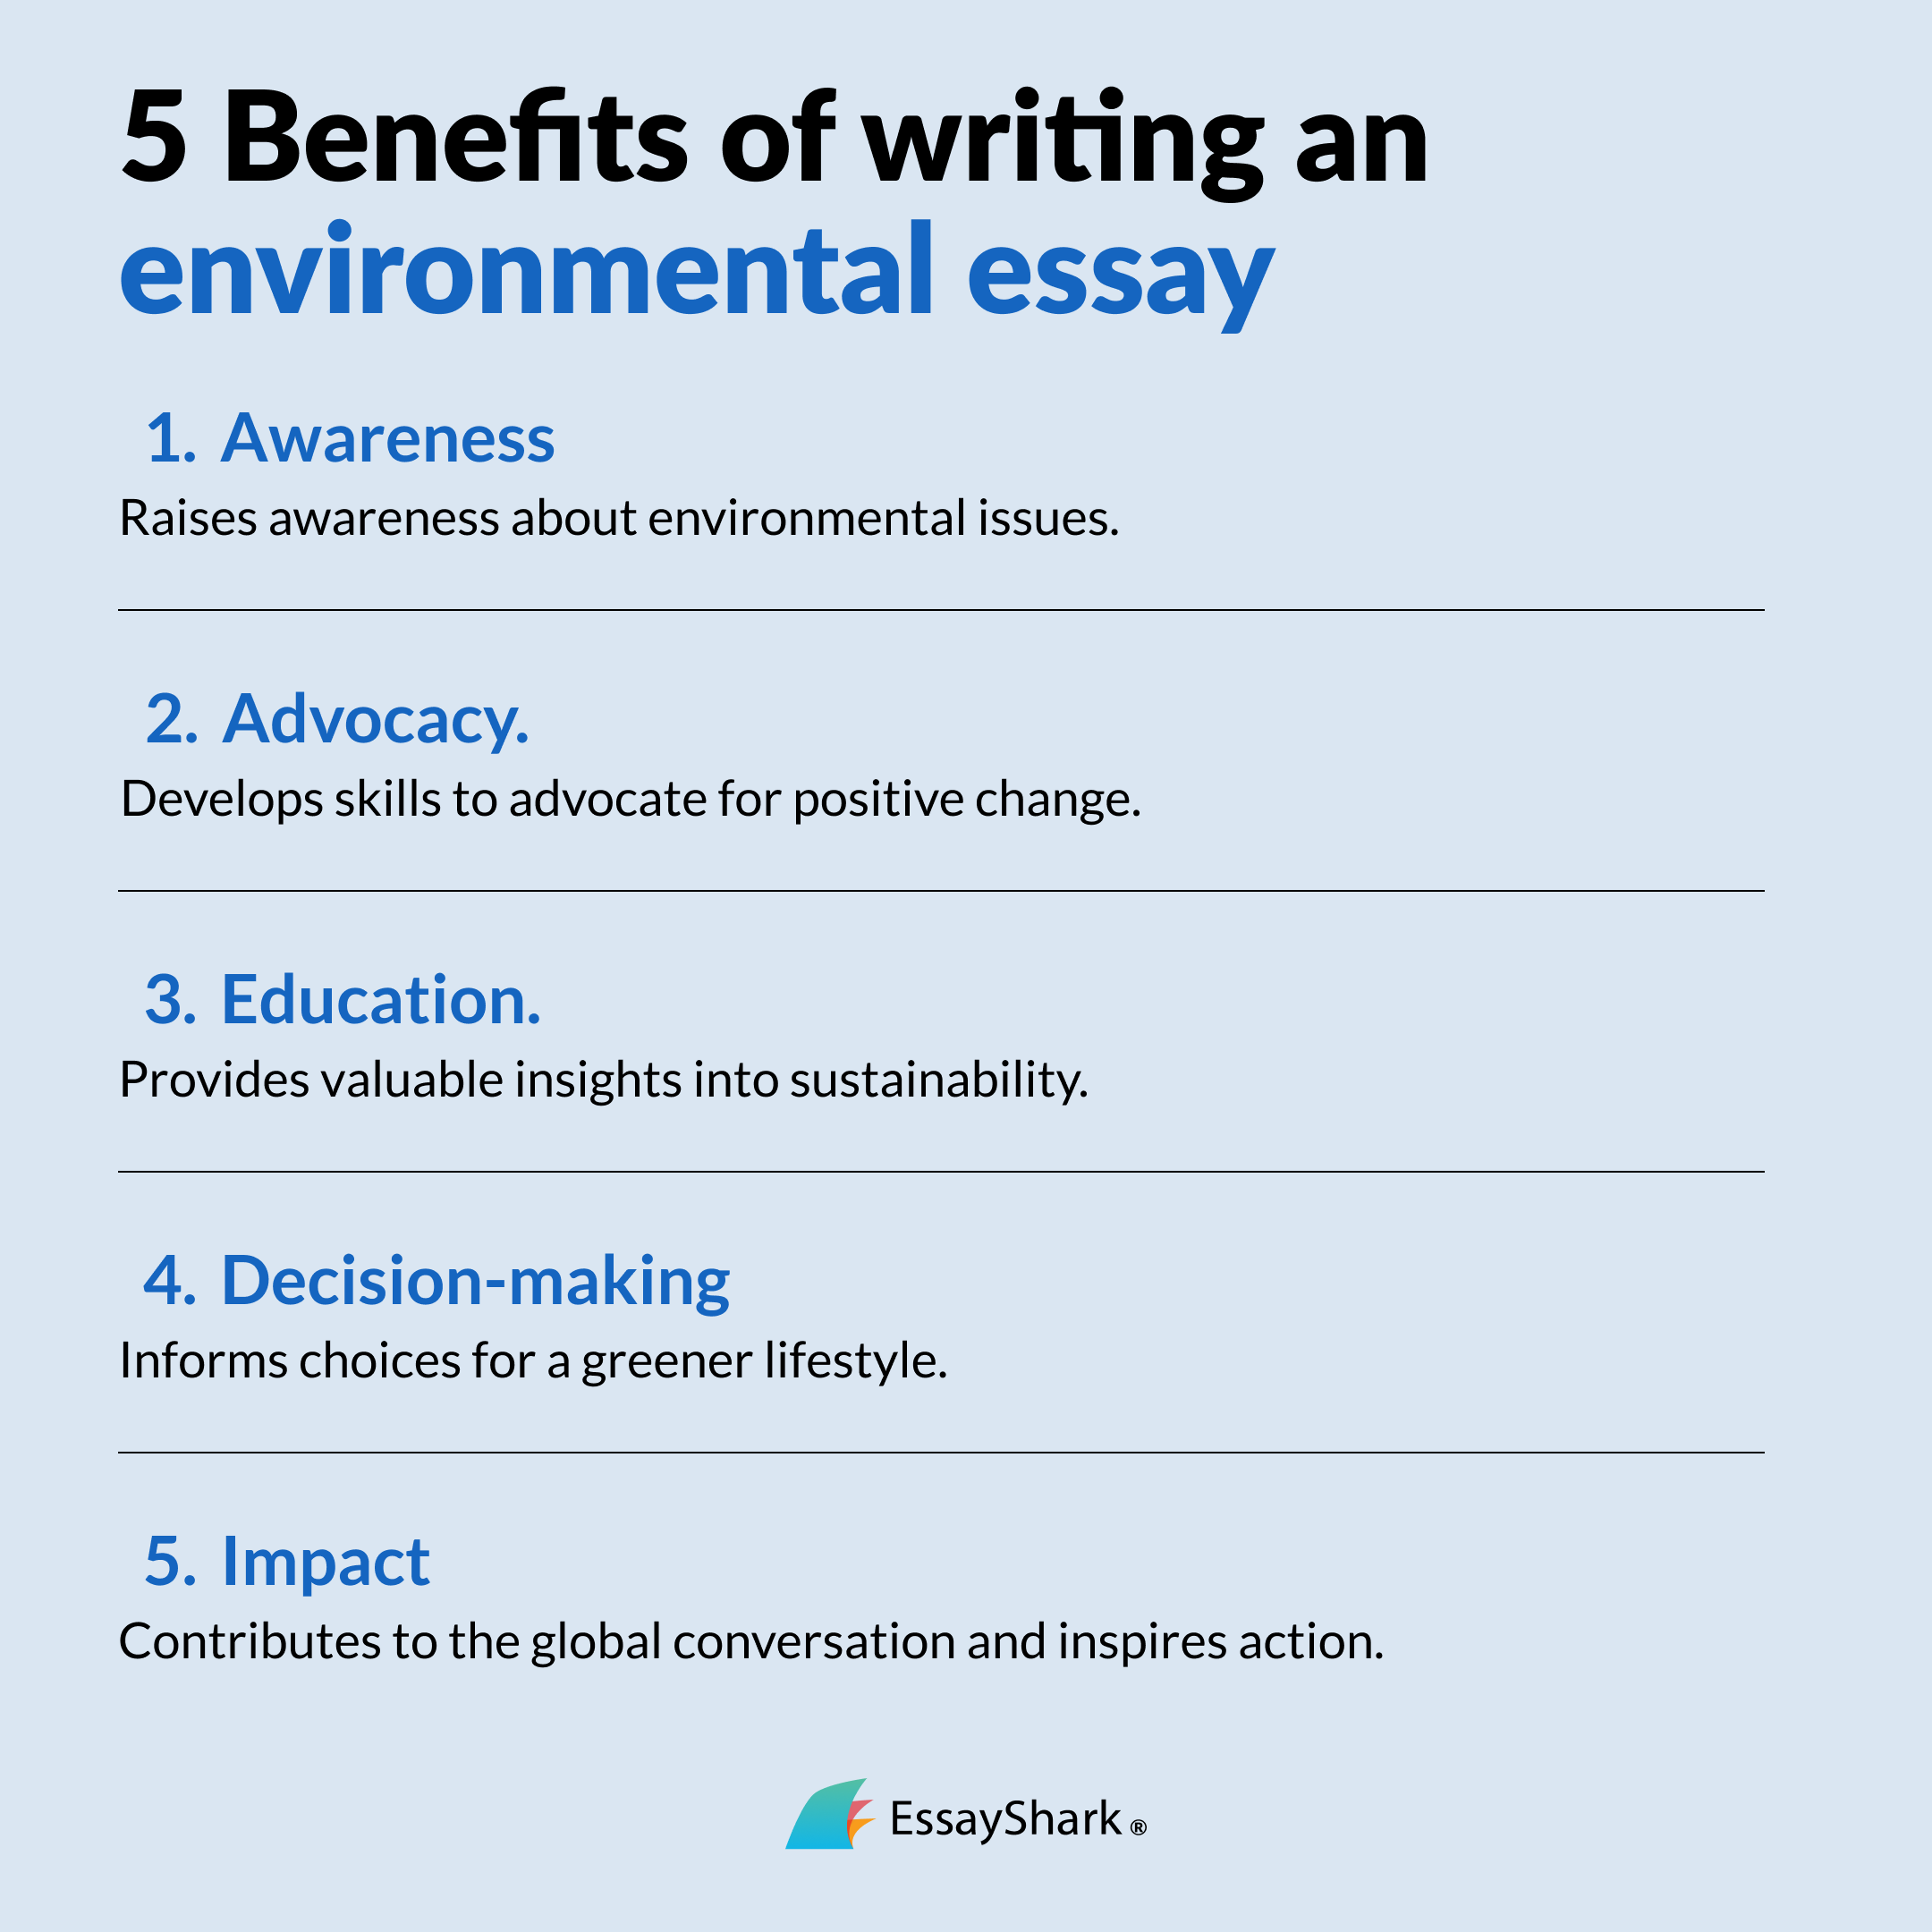 5 Benefits of Writing an Environmental Essay